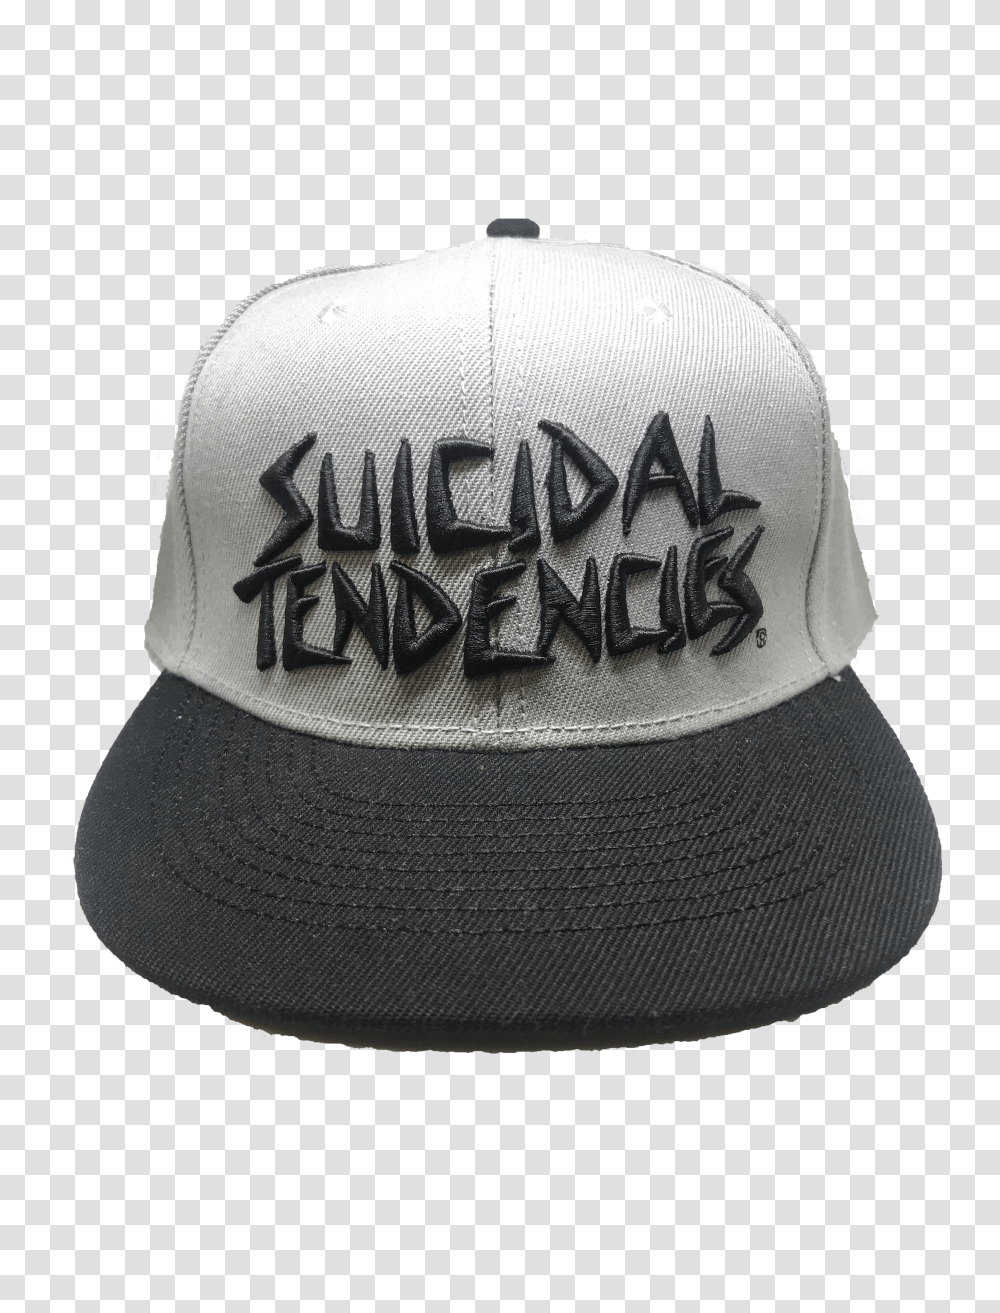 Suicidal Tendencies Embroidered Cap Baseball Cap Transparent Png